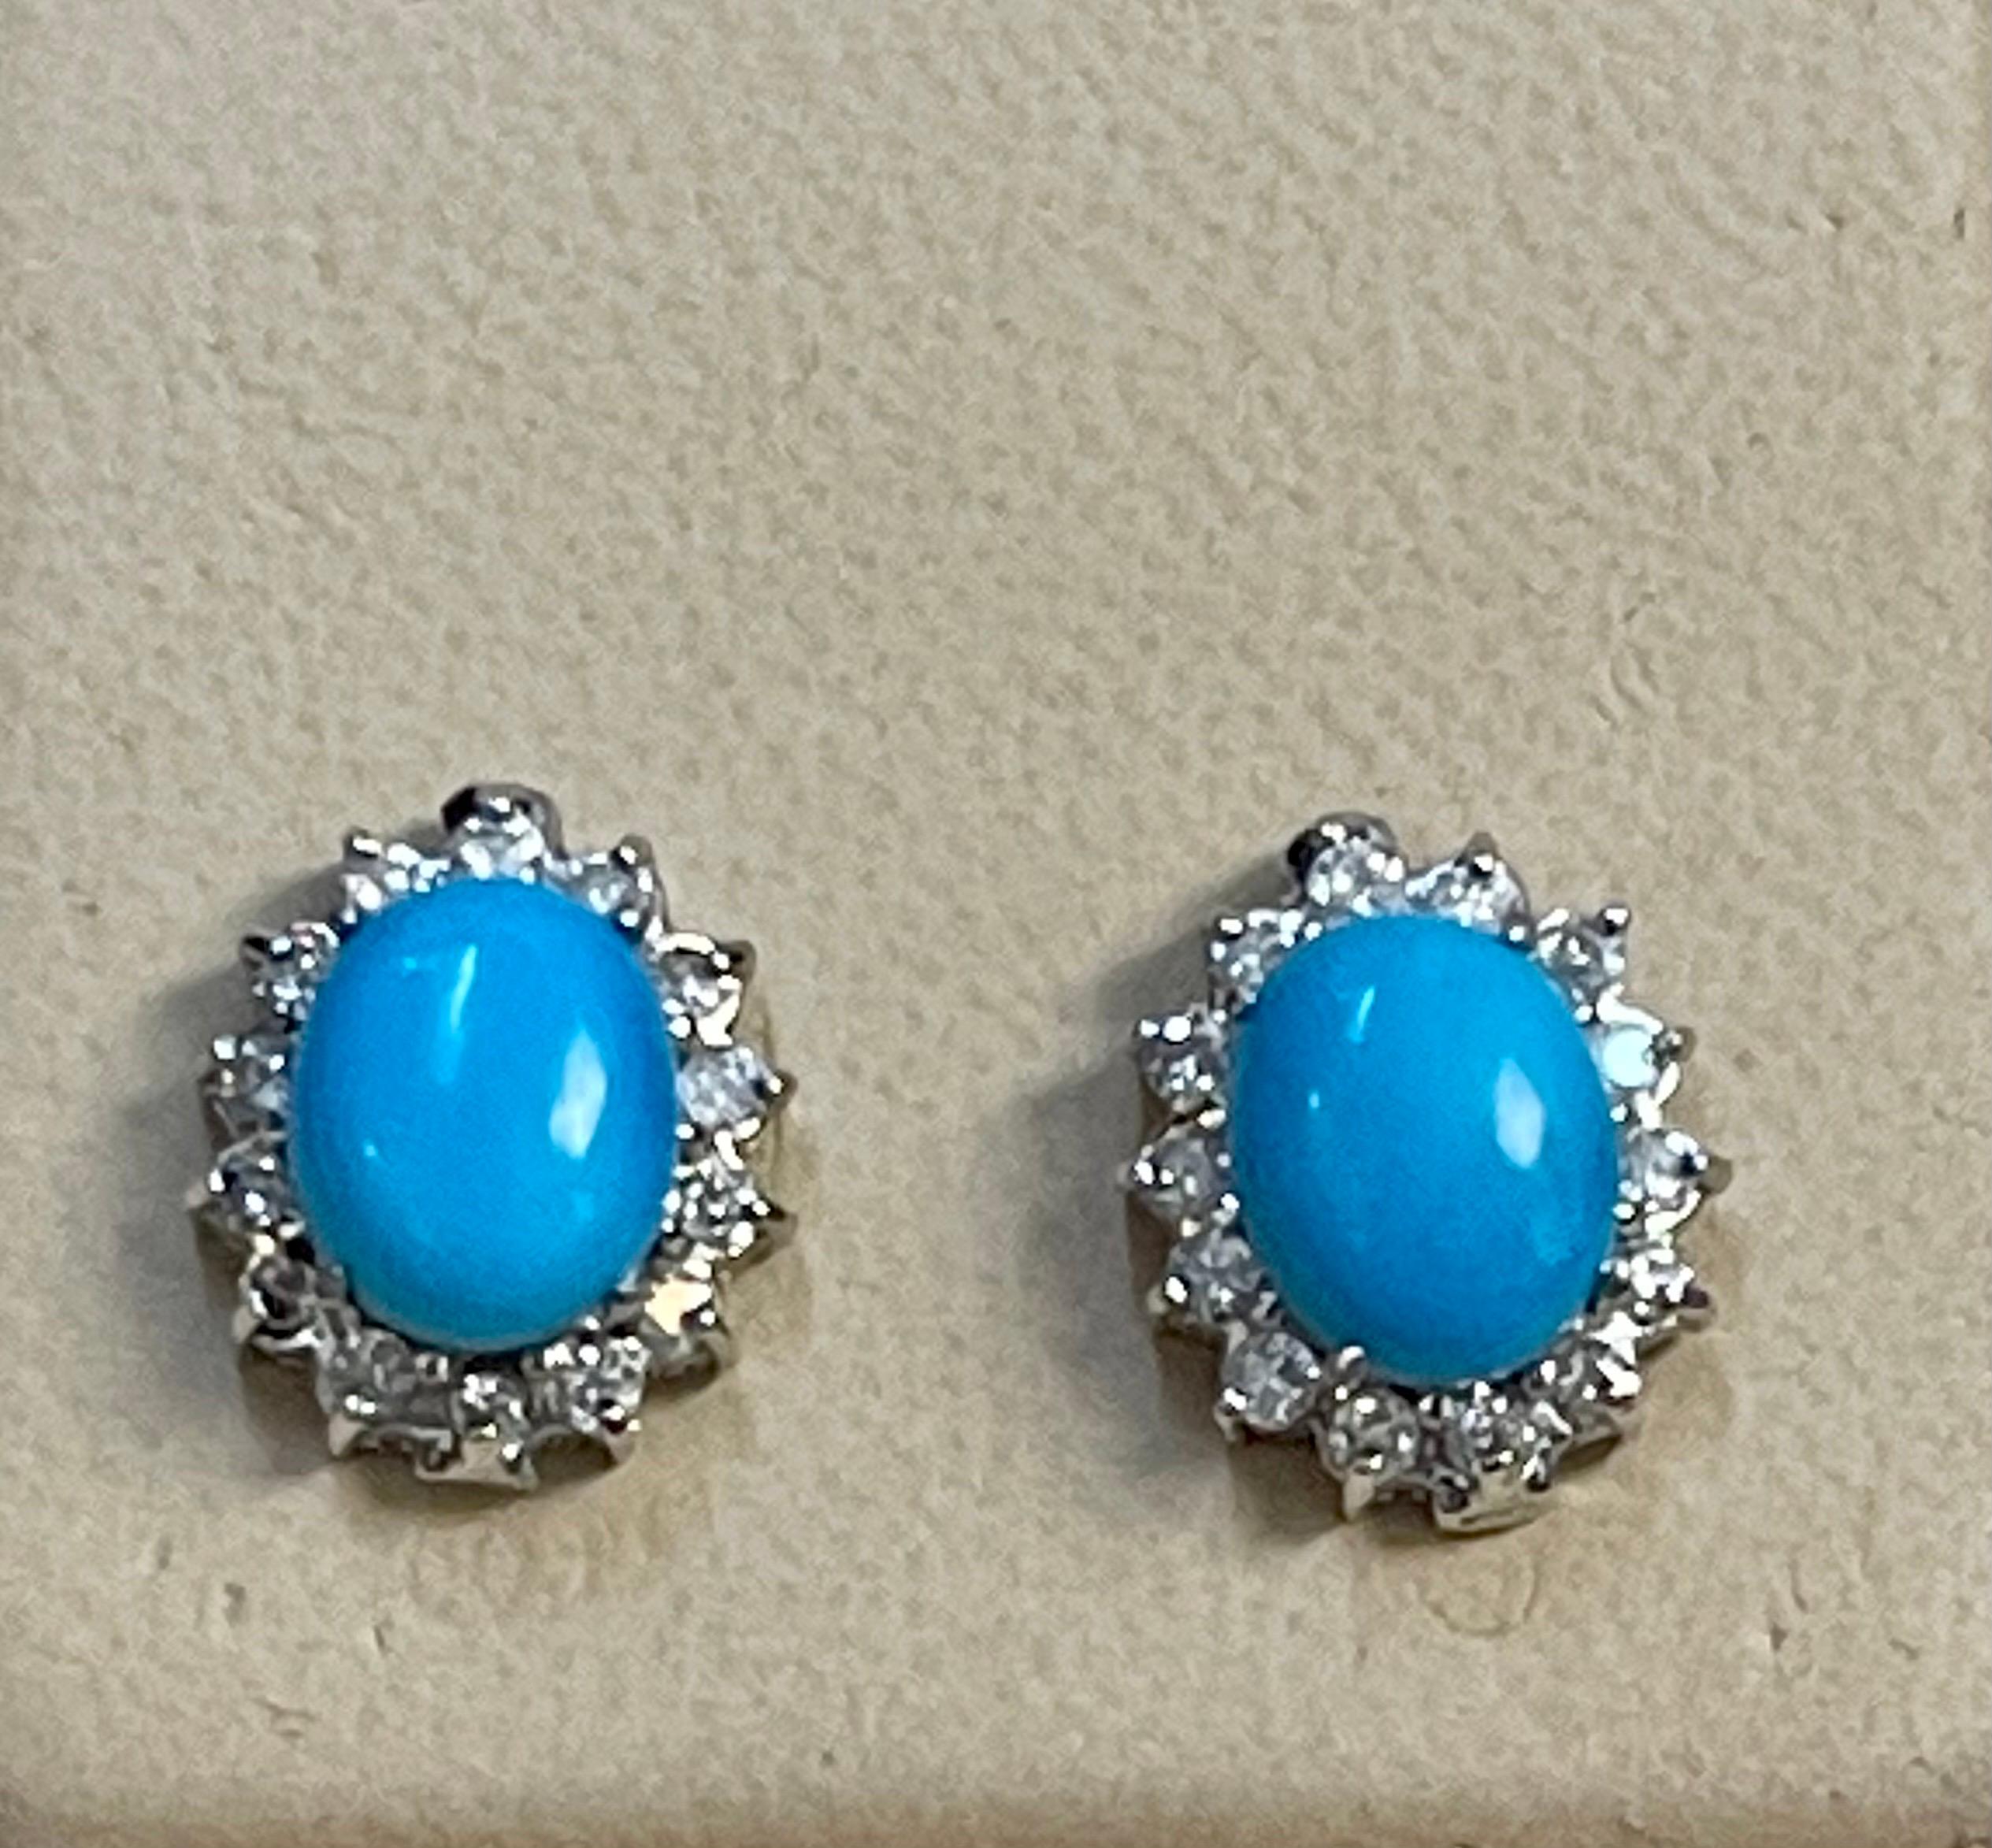 8 Ct Oval Sleeping Beauty Turquoise & 1 Ct Diamond Stud Earrings 14 K White Gold 8